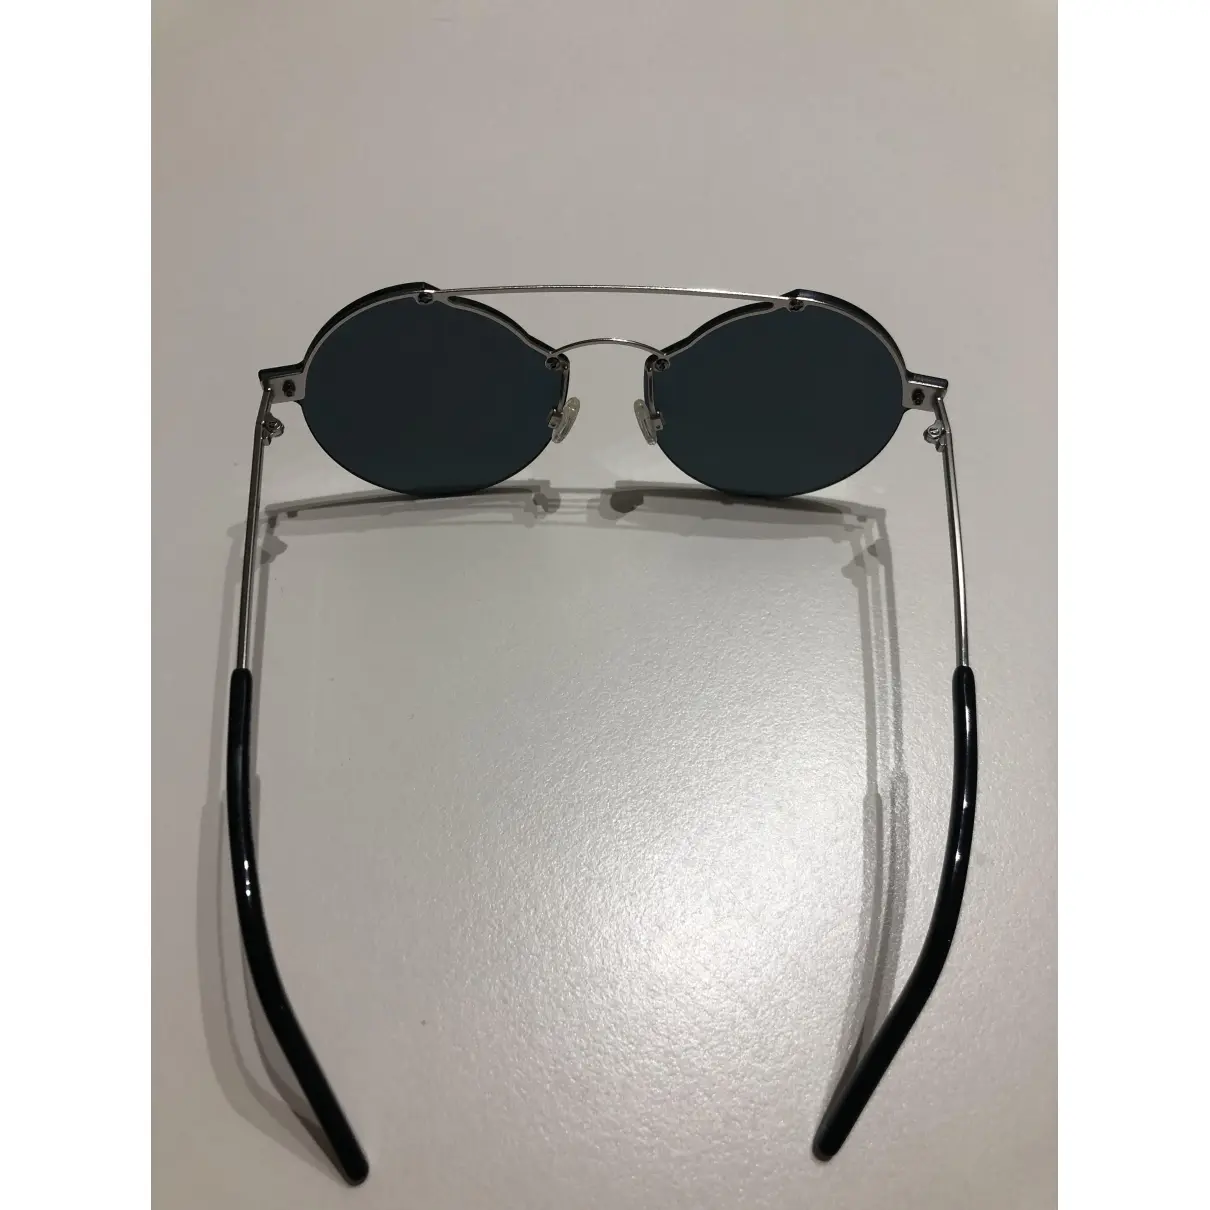 Luxury Jplus Sunglasses Women